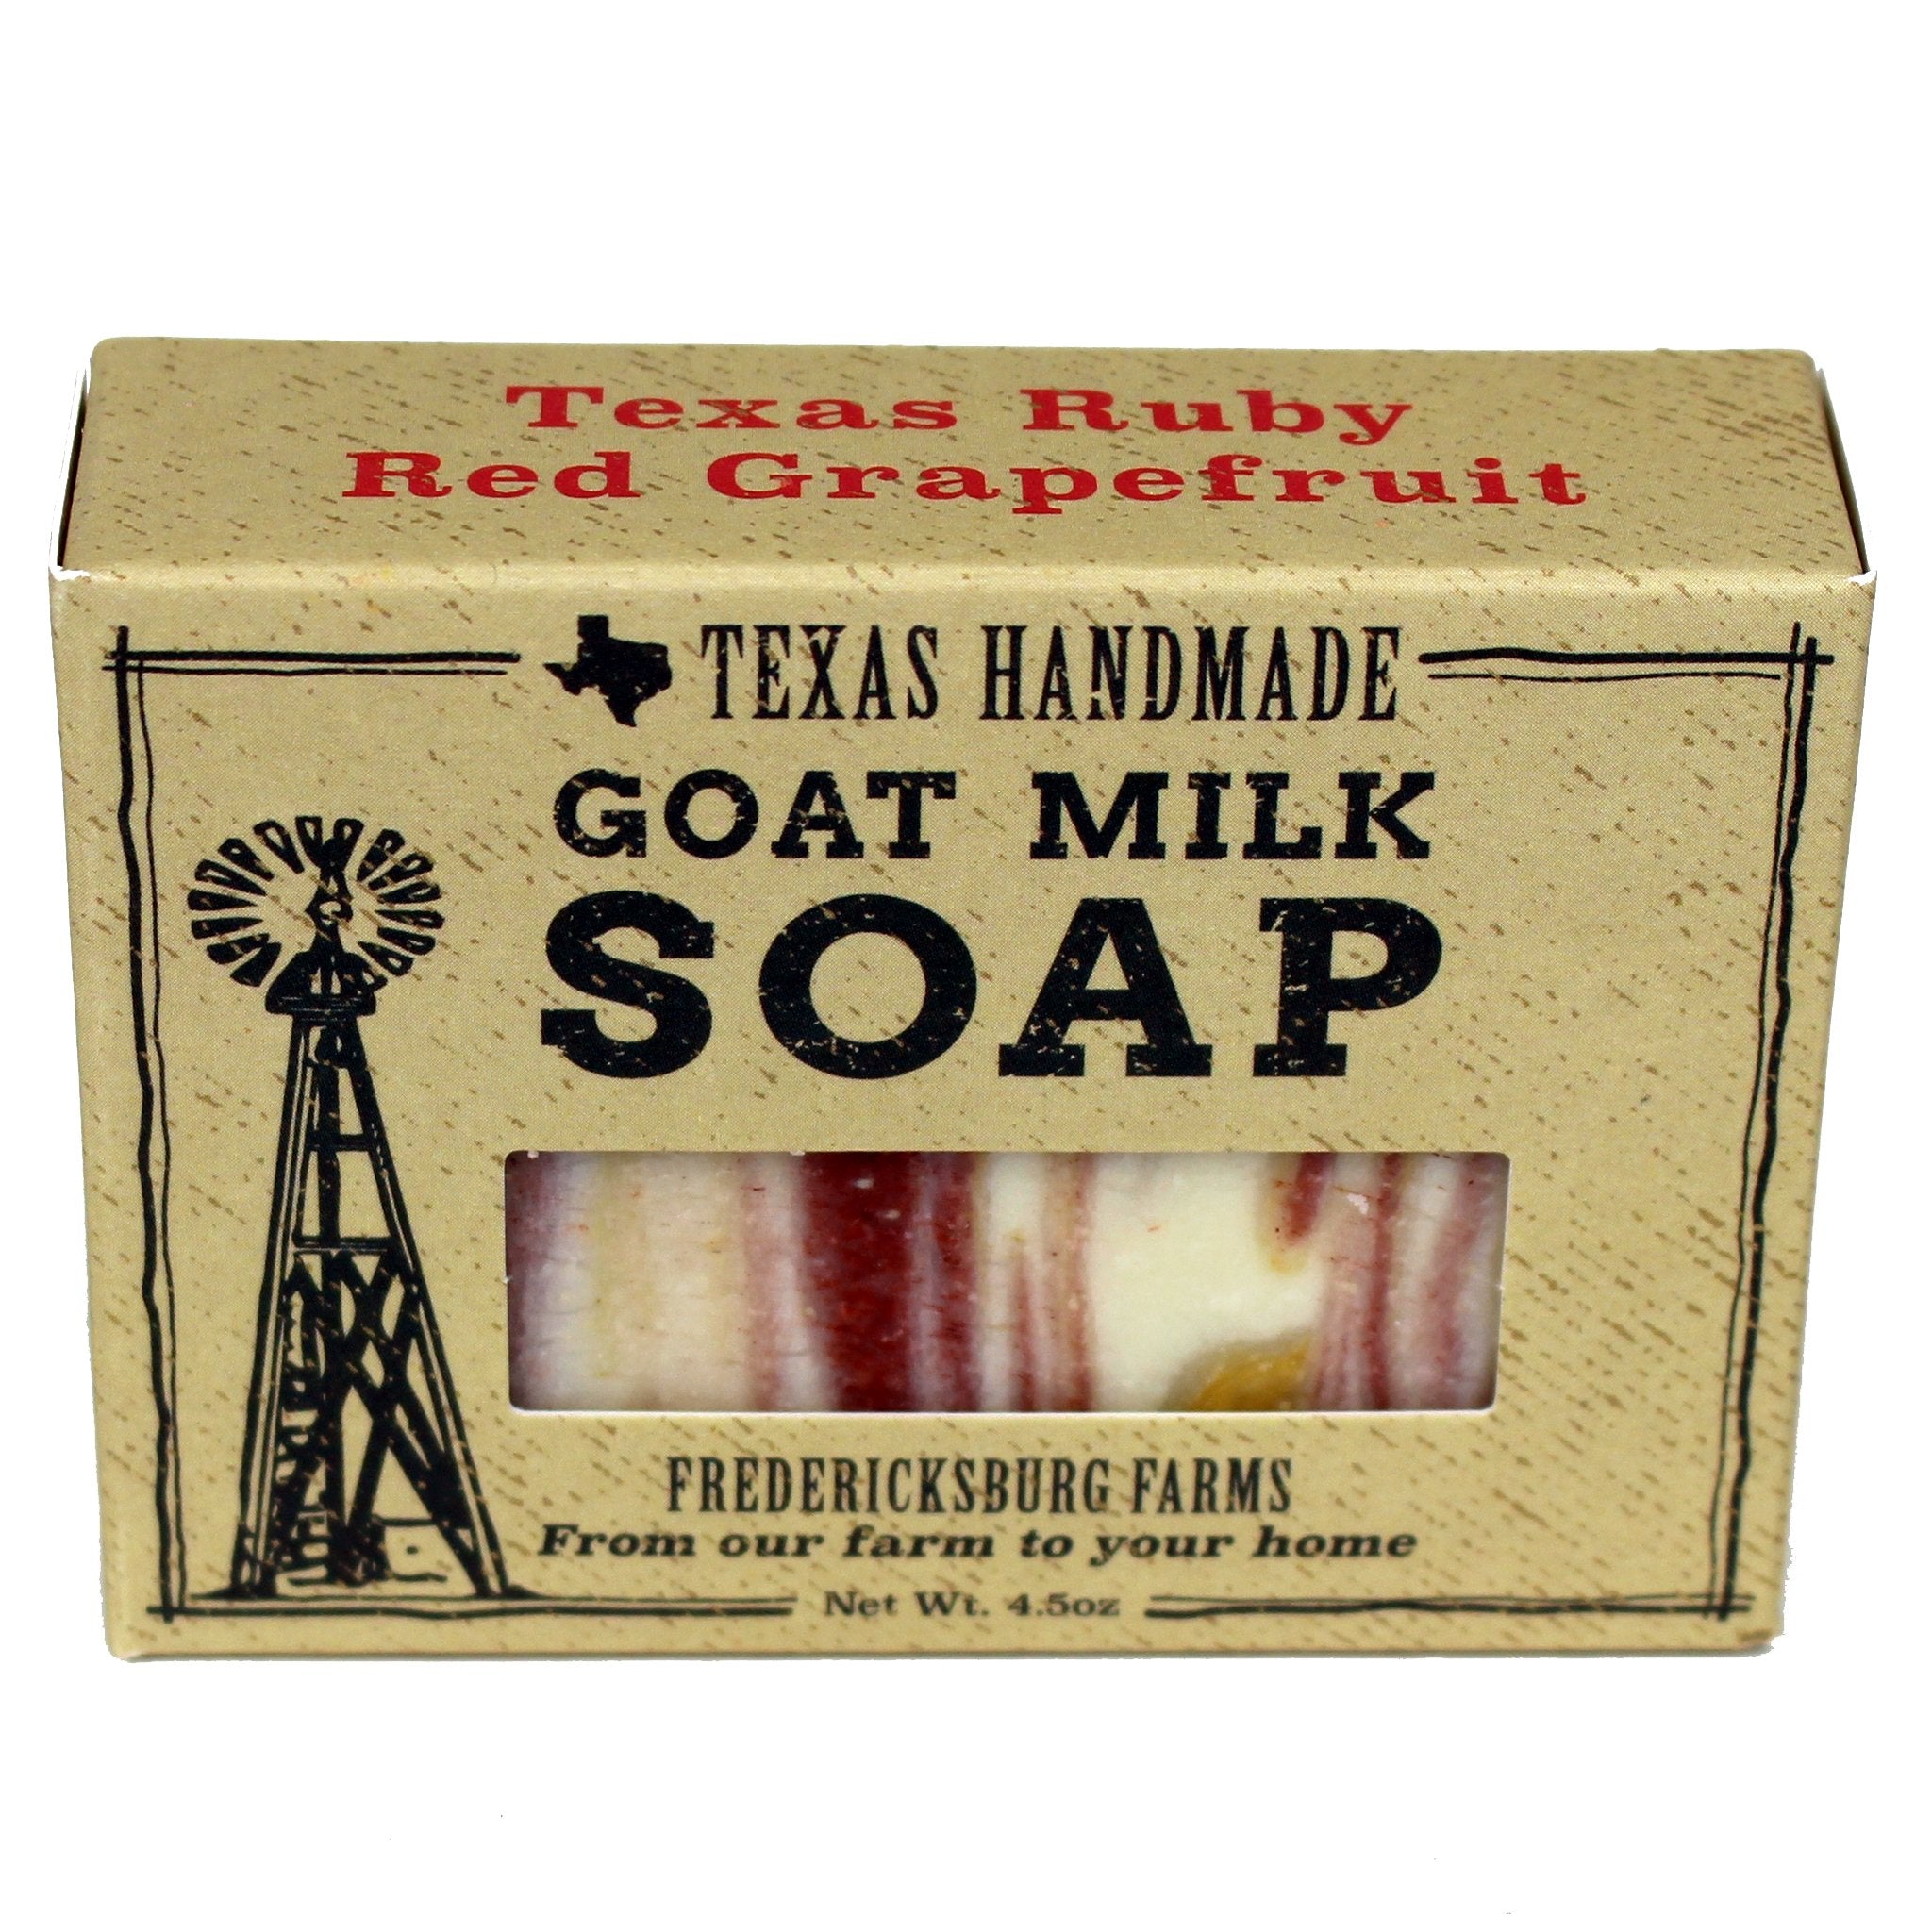 Fredricksburg Farms Goat Milk Soap - Texas Ruby Red Grapefruit